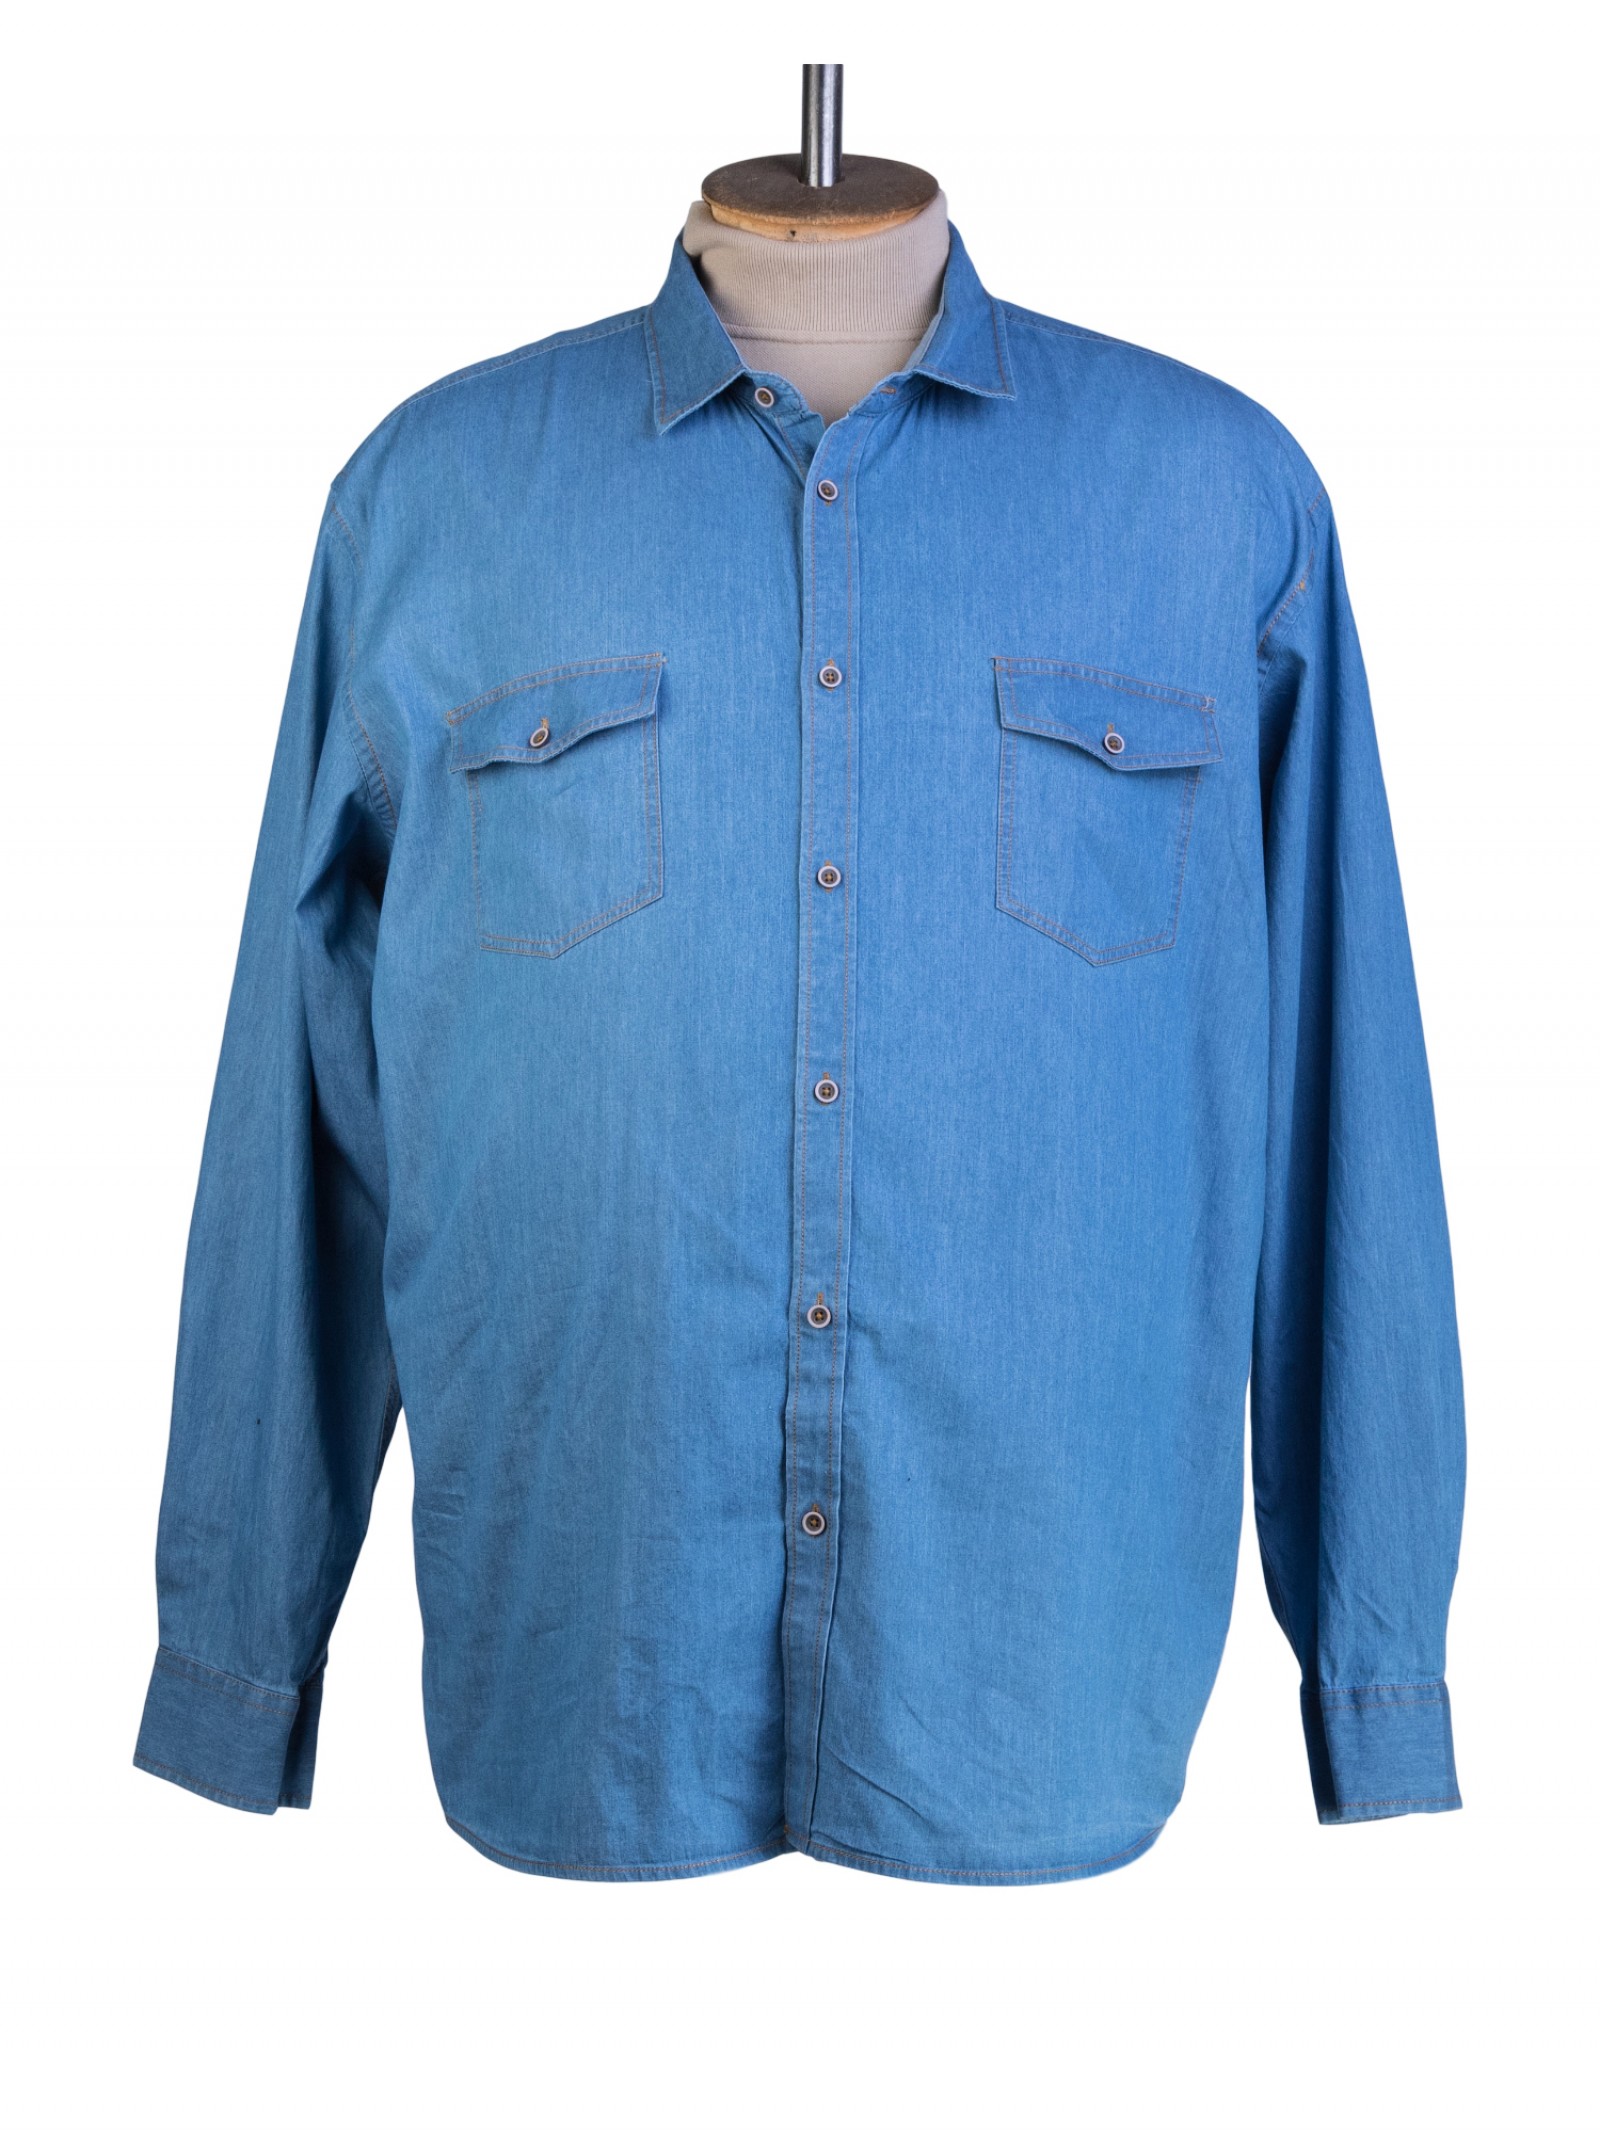 Джинсовые рубашки большие размеры. Tom Tompson рубашка джинсовая мужская. Джинсовая рубашка Boss Hugo Boss. Pimlico Blue рубашка мужская. Рубашка Коллинз 4xl.